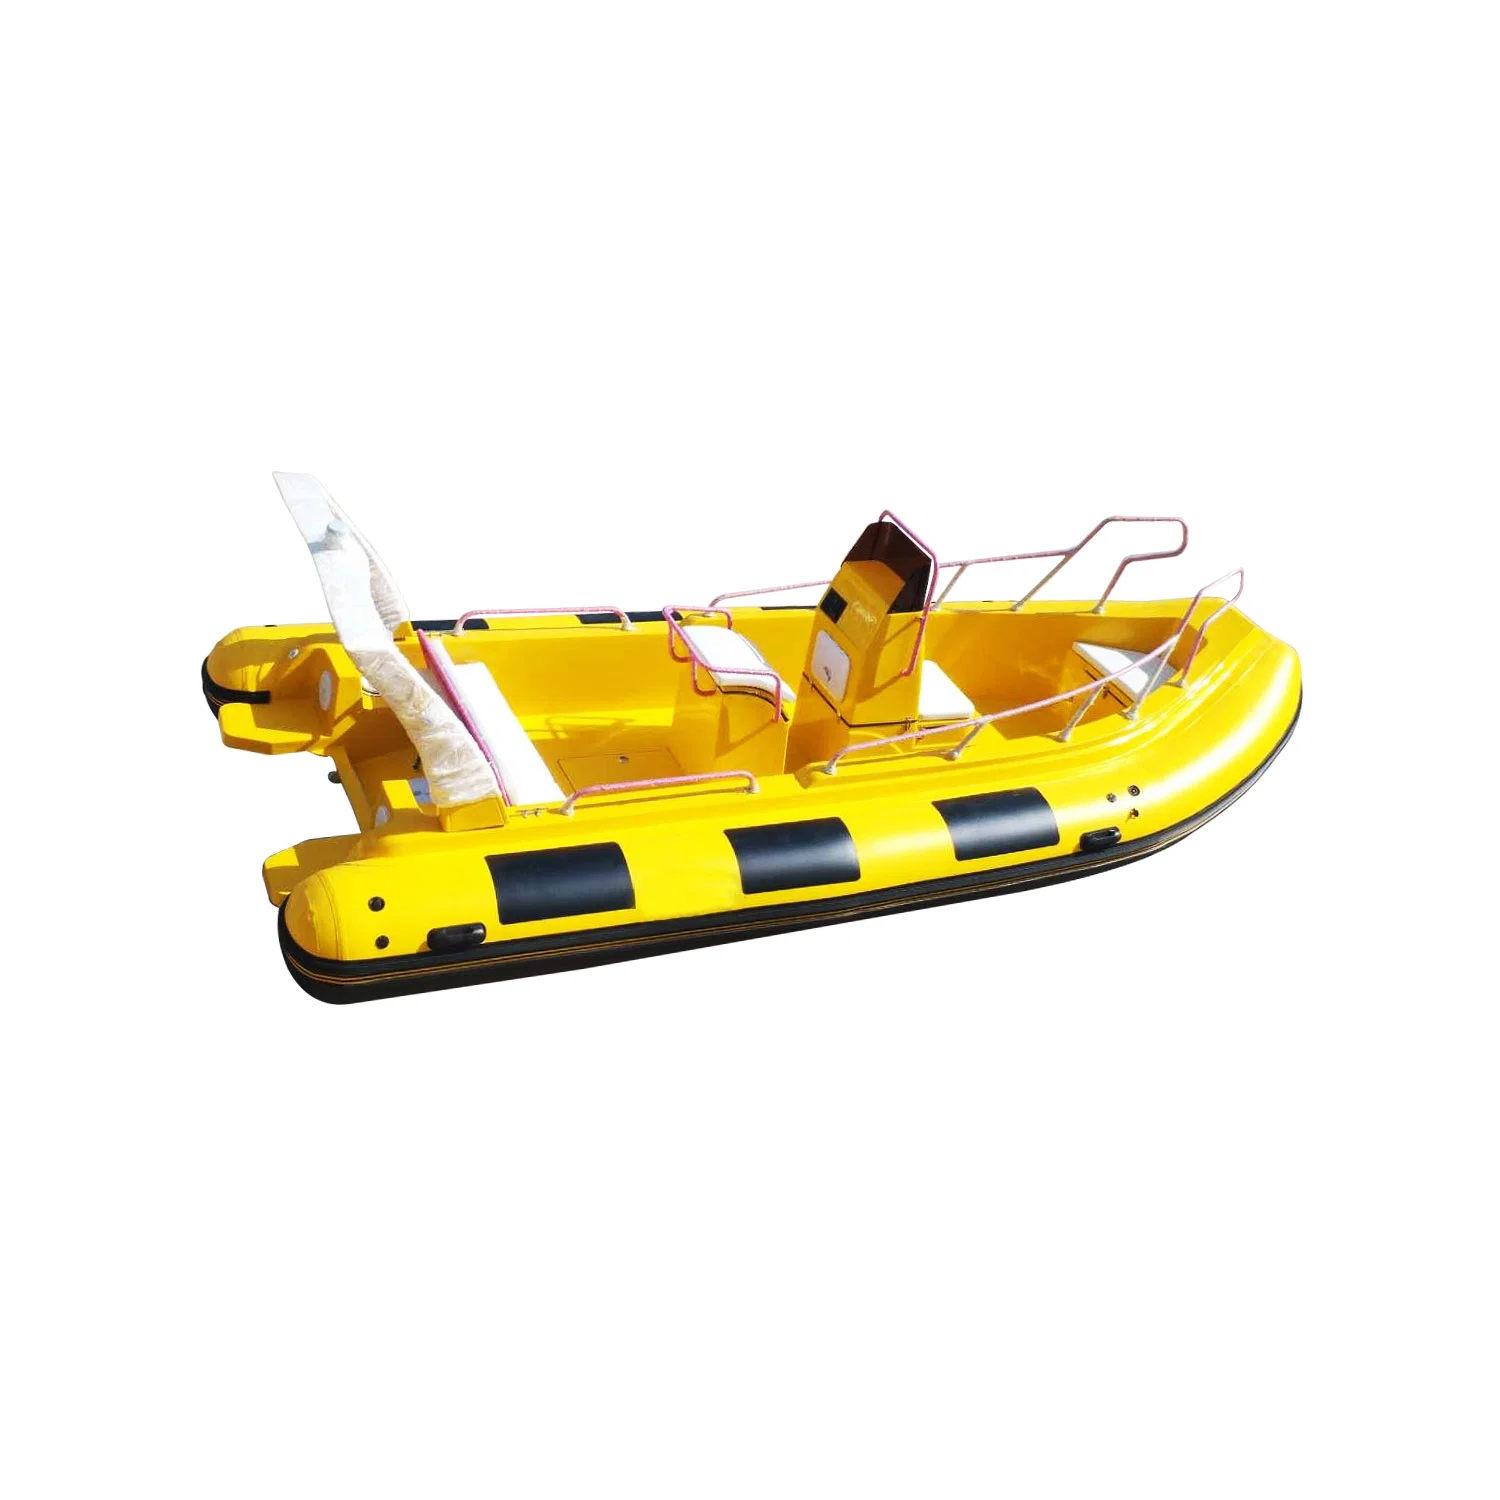 5.8m High Quality Rib/Fishing/Motor/Inflatable/Sport Boat